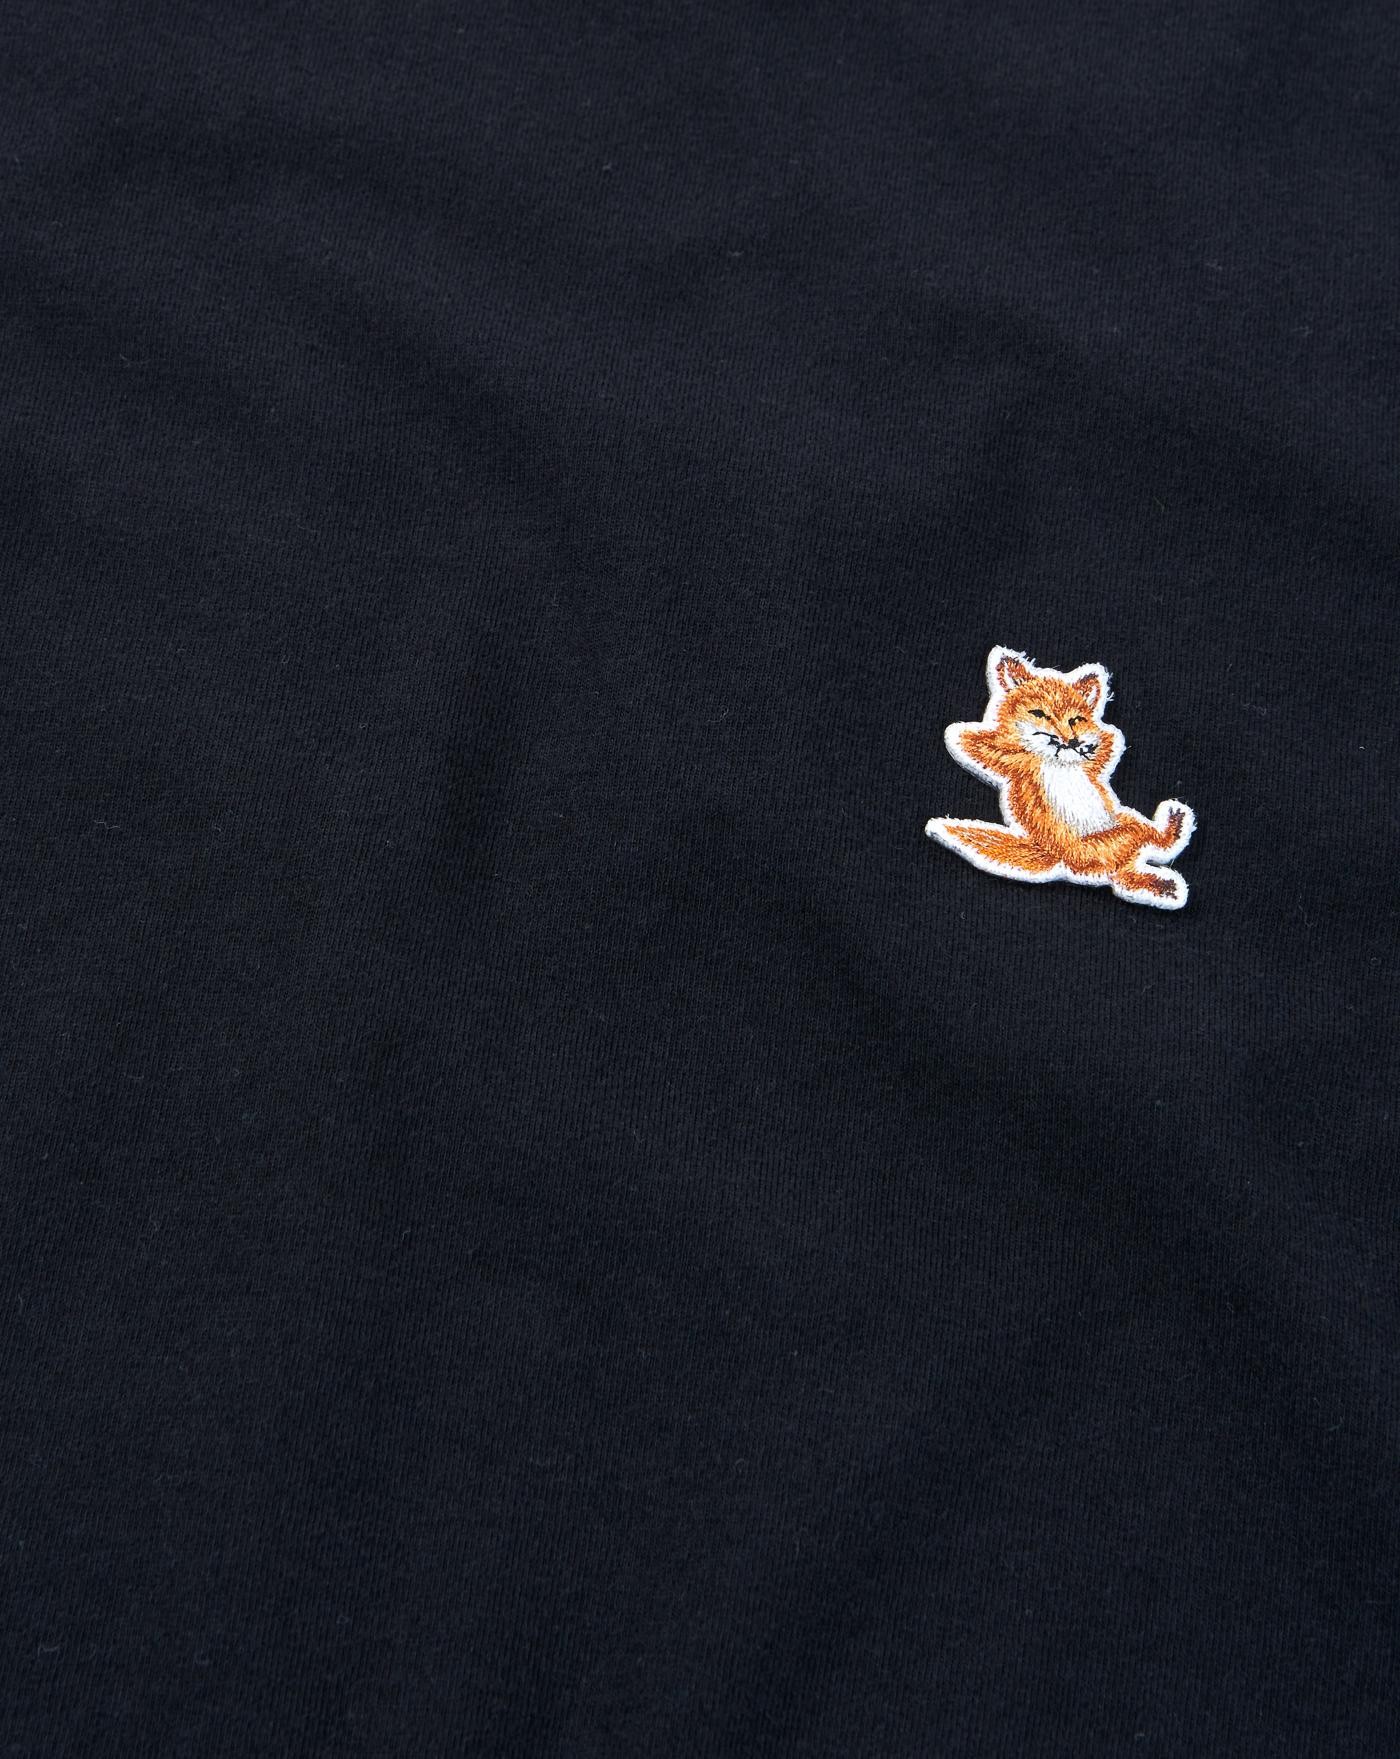 Camiseta Maison Kitsune Chillax Fox Patch 2